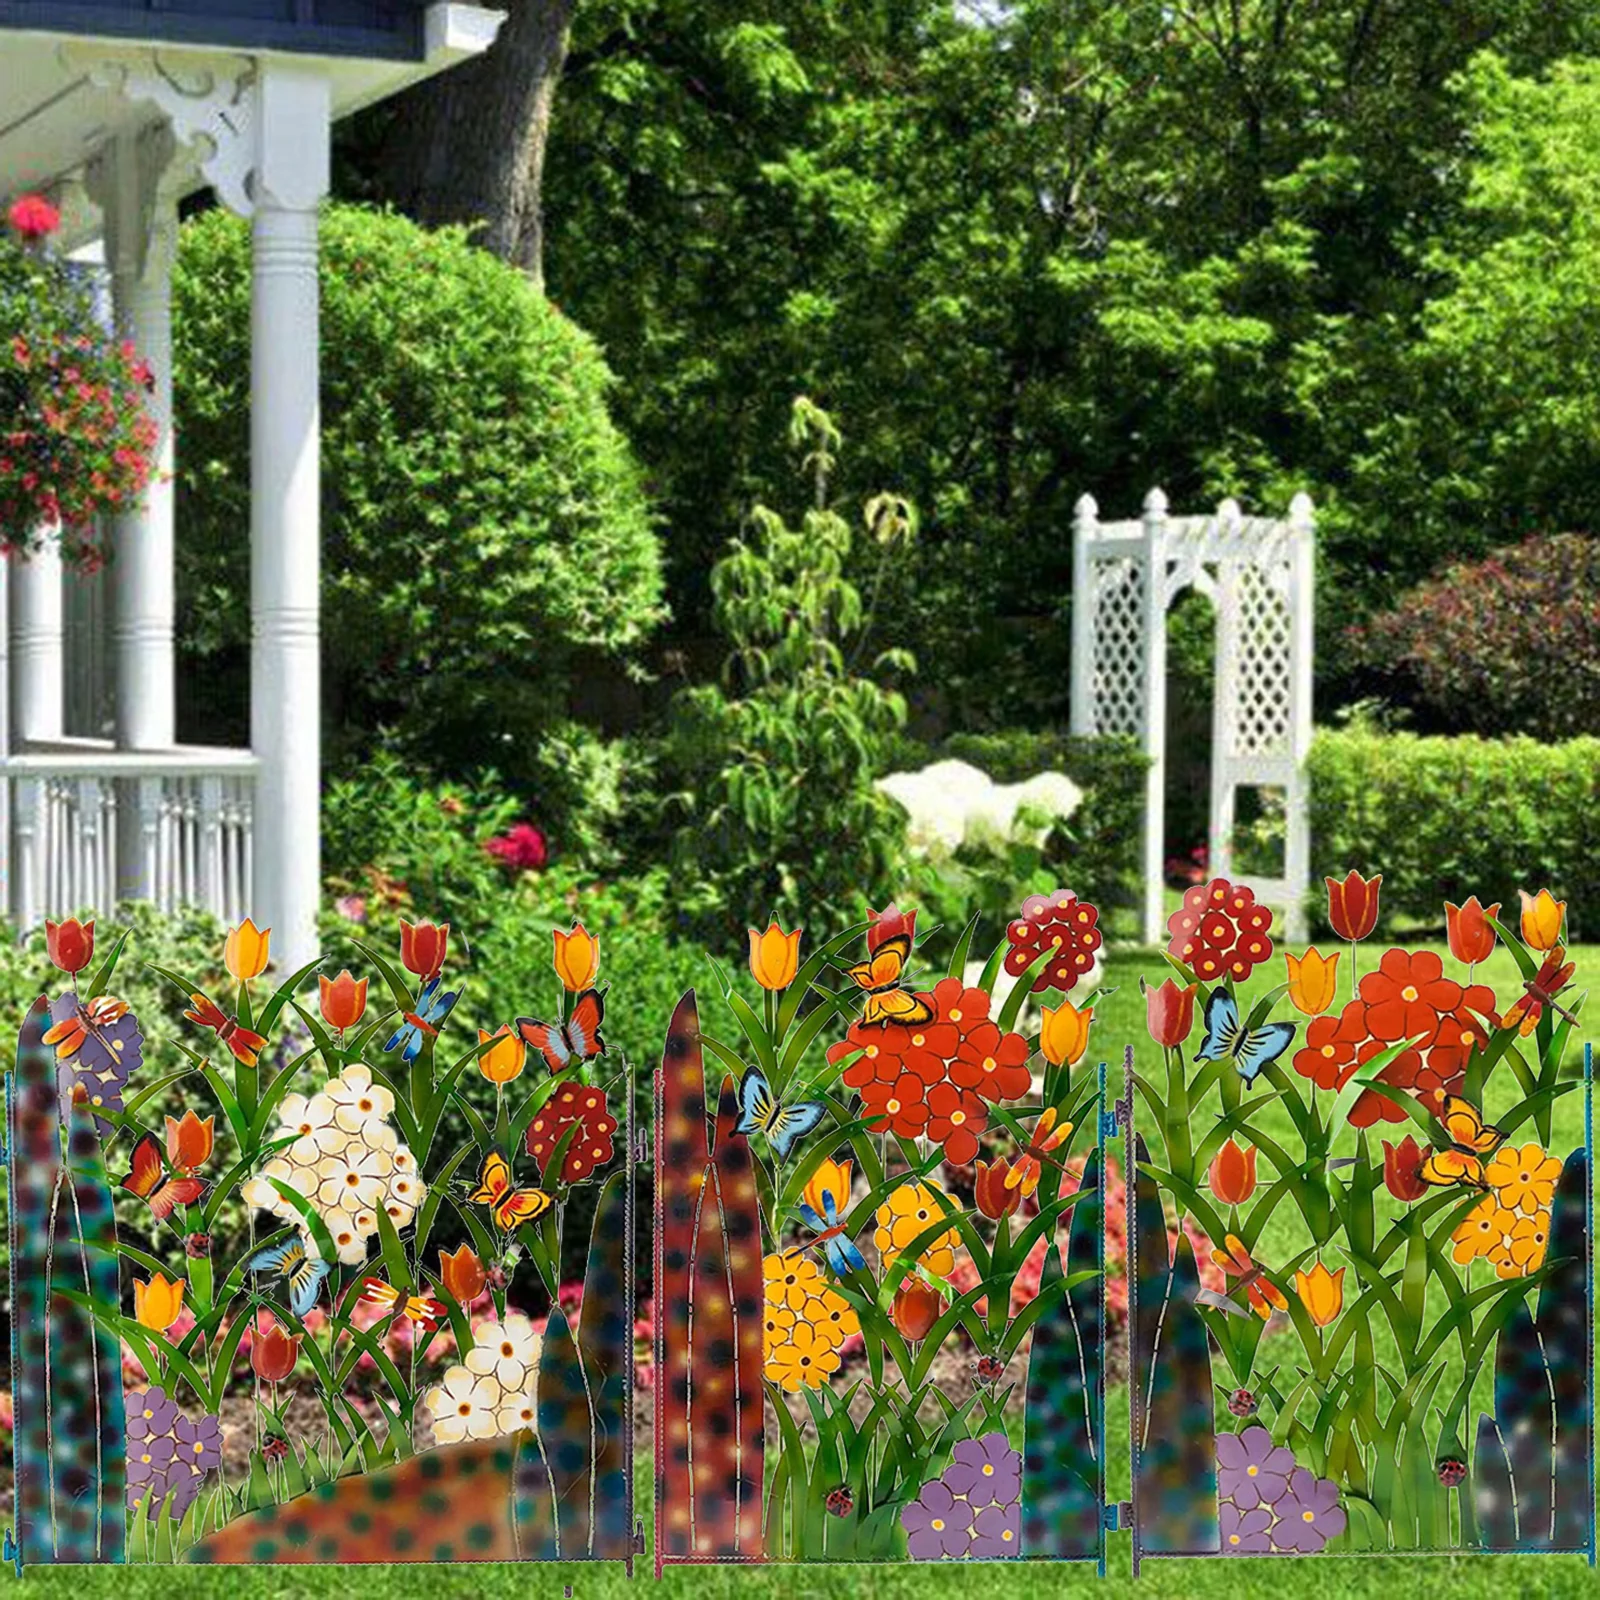 Faux Garden Trellis Wrought Iron Guardrail Outdoor Decoration for Backdrop Garden Balcony Yard Lawn Stakes